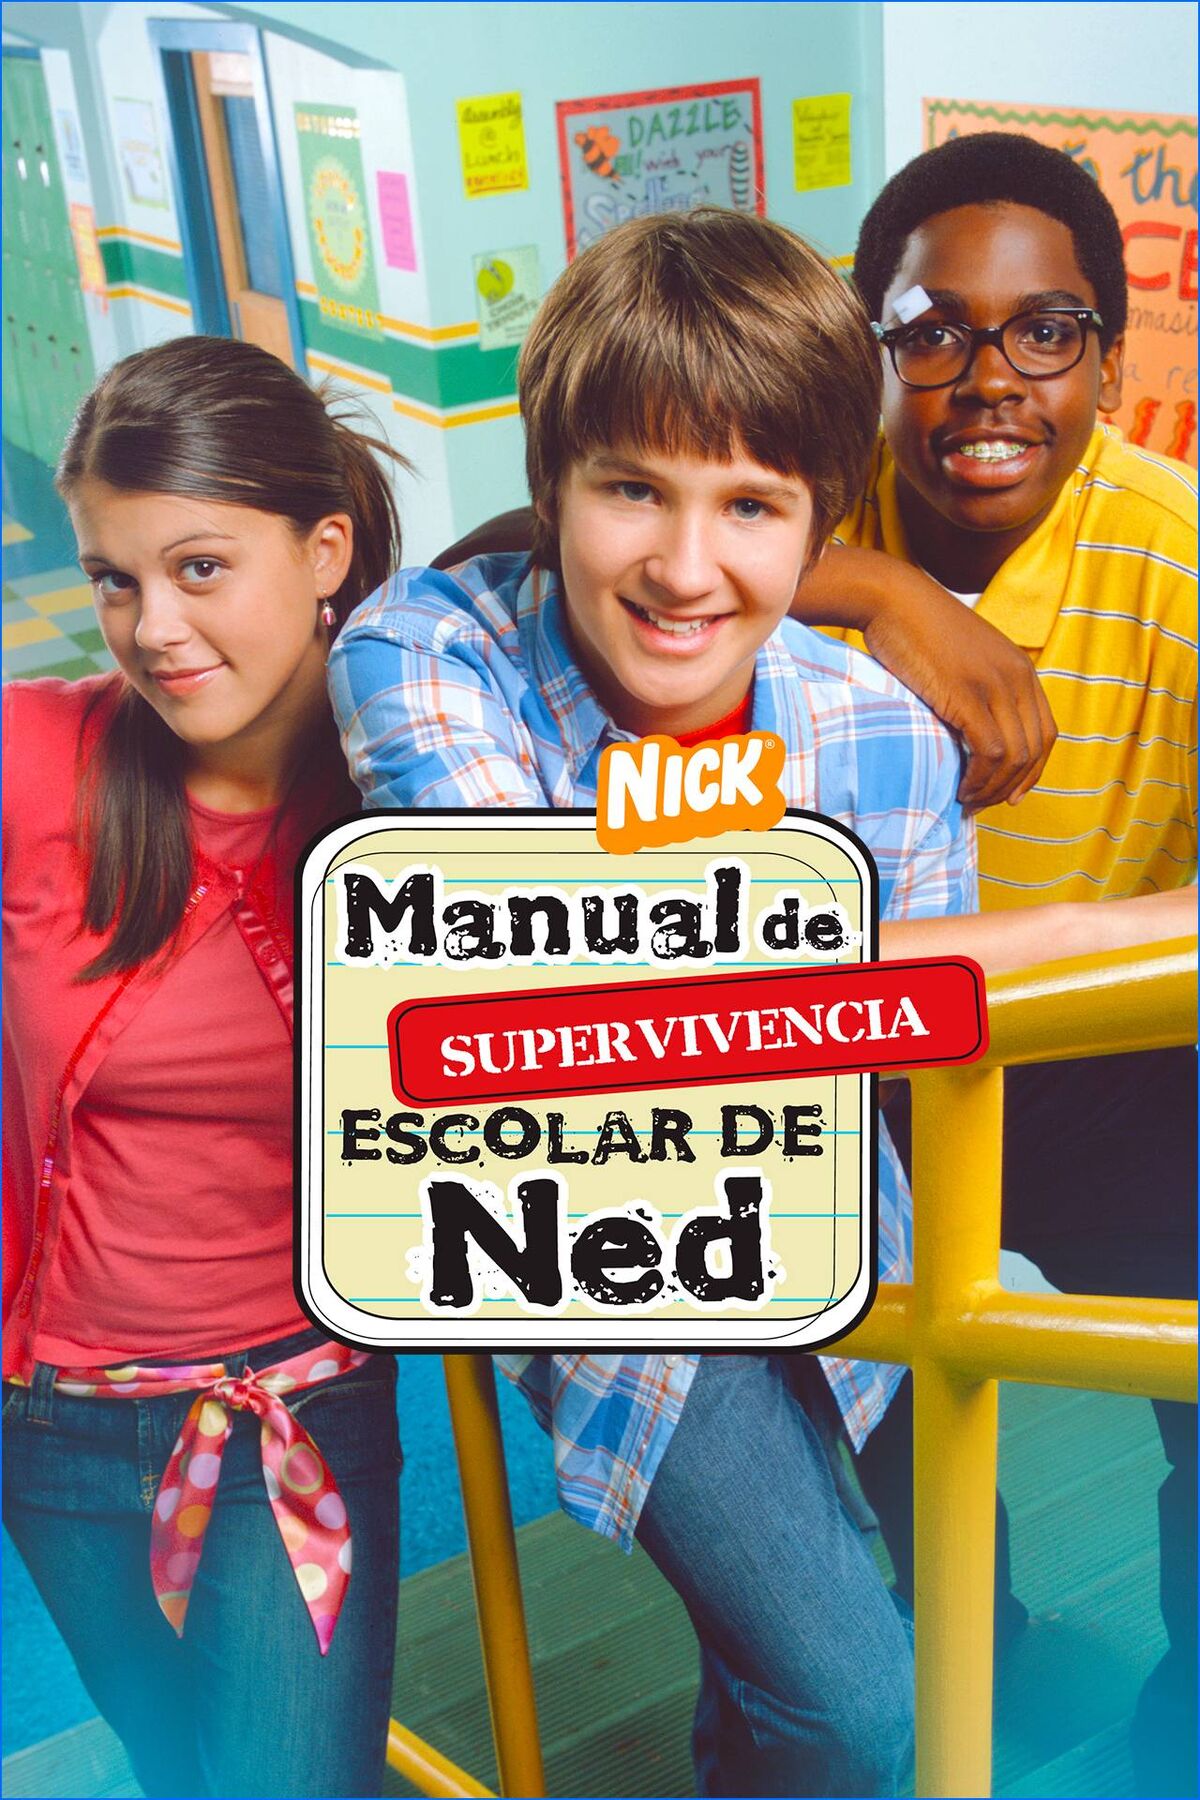 Manual de supervivencia escolar de Ned, Doblaje Wiki